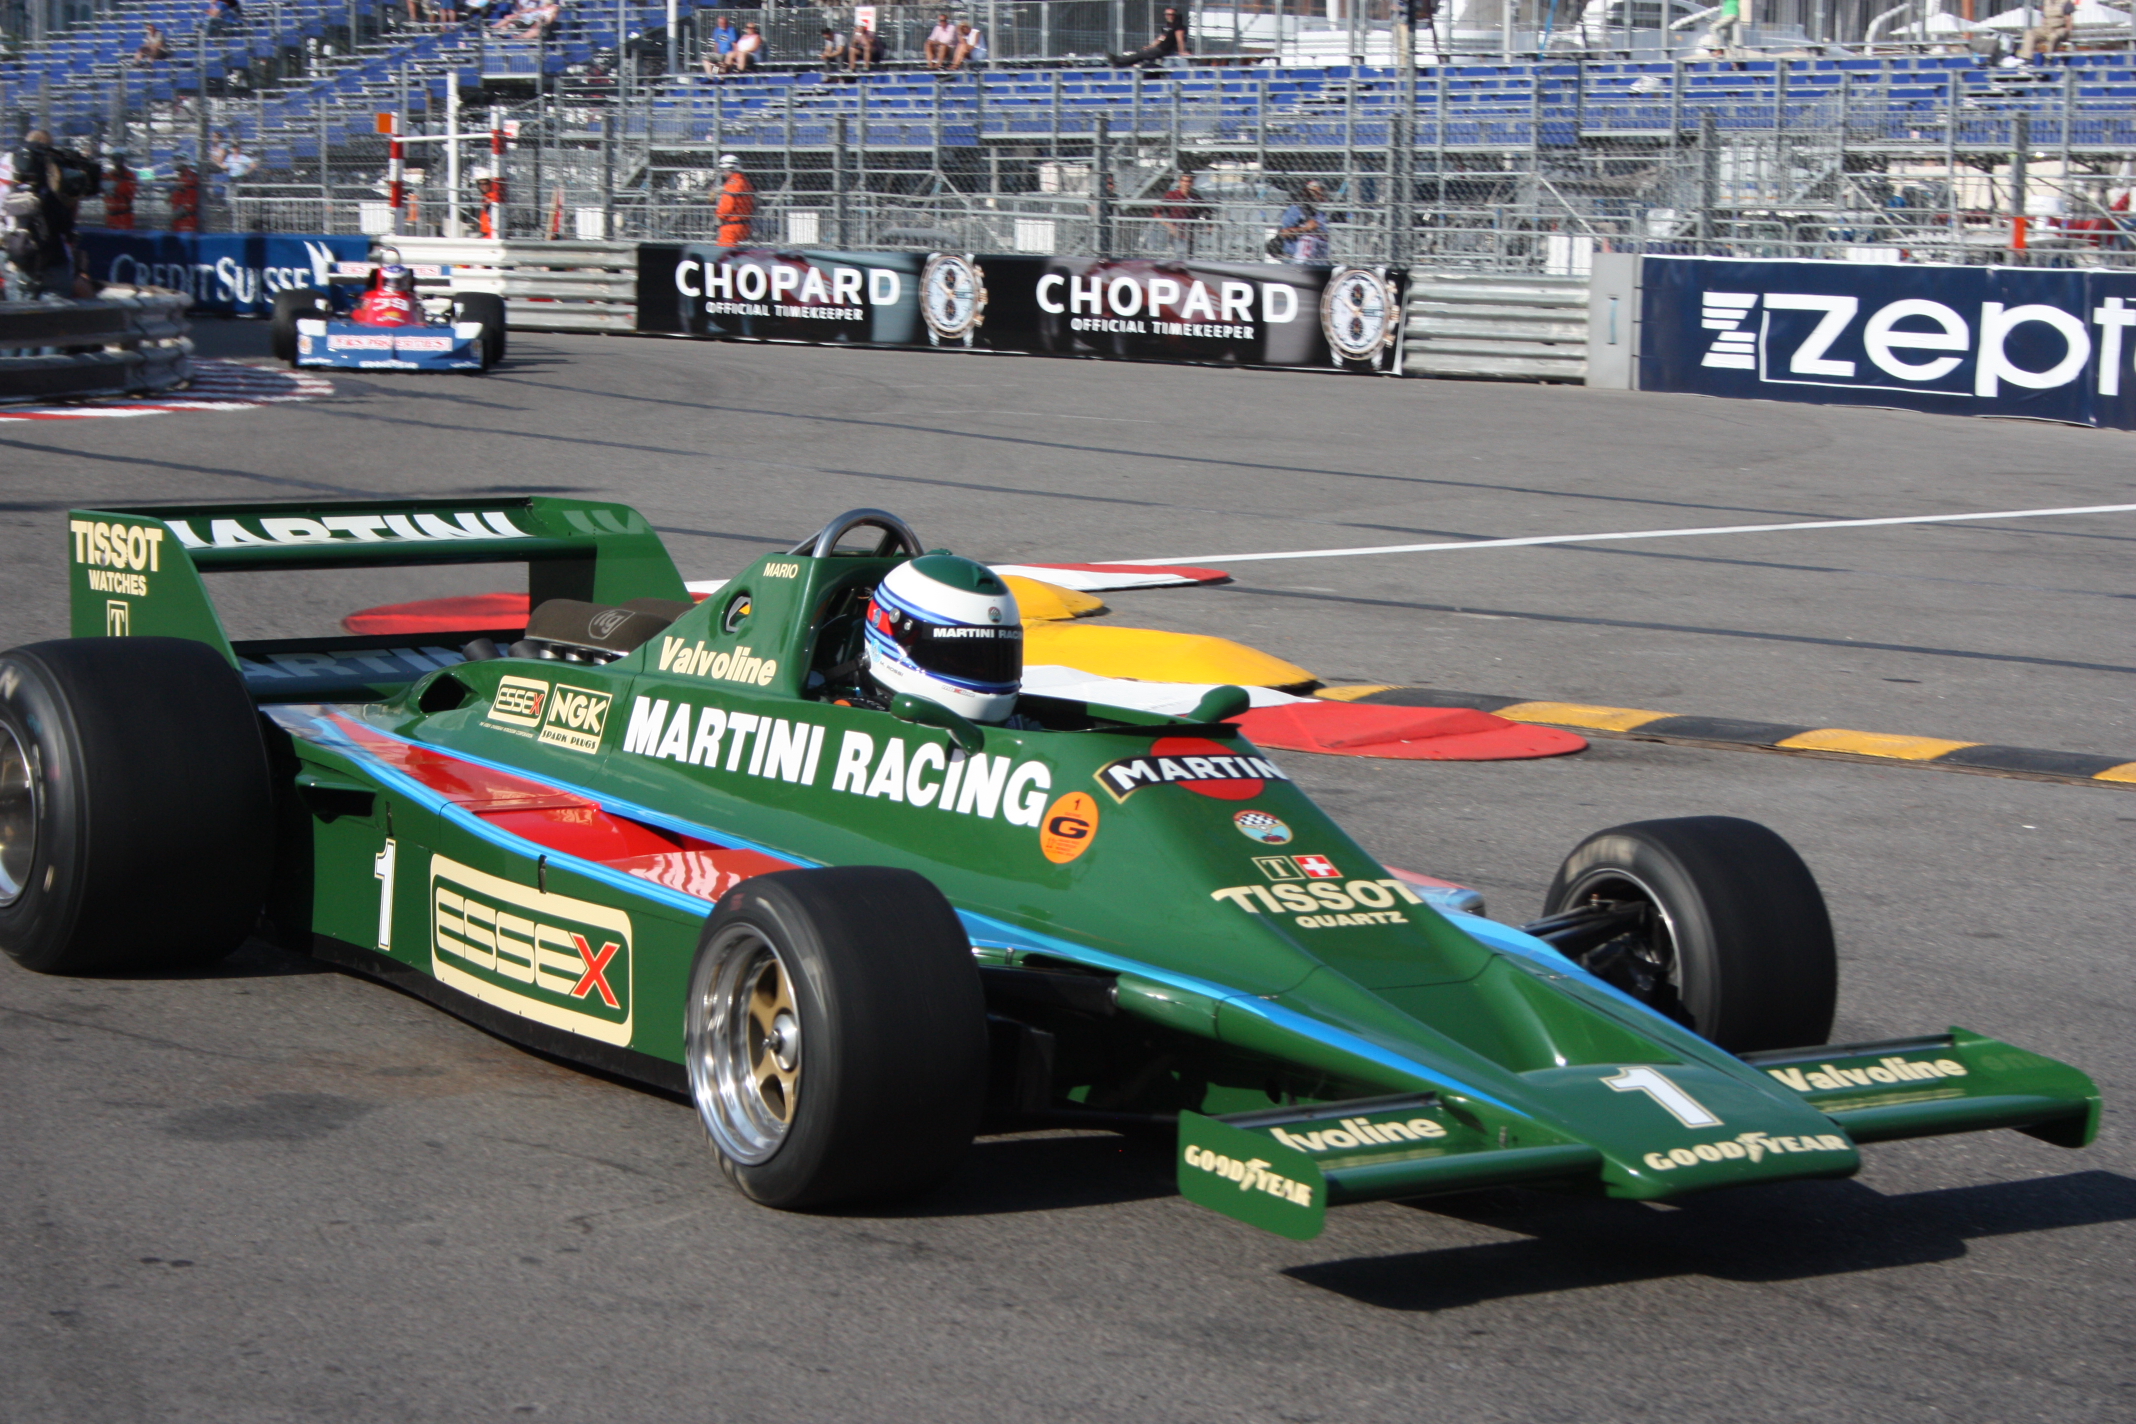 Dědic alkoholového impéria Martini & Rossi, Manfredo Rossi di Montelera startoval jak na Lotusu 80…